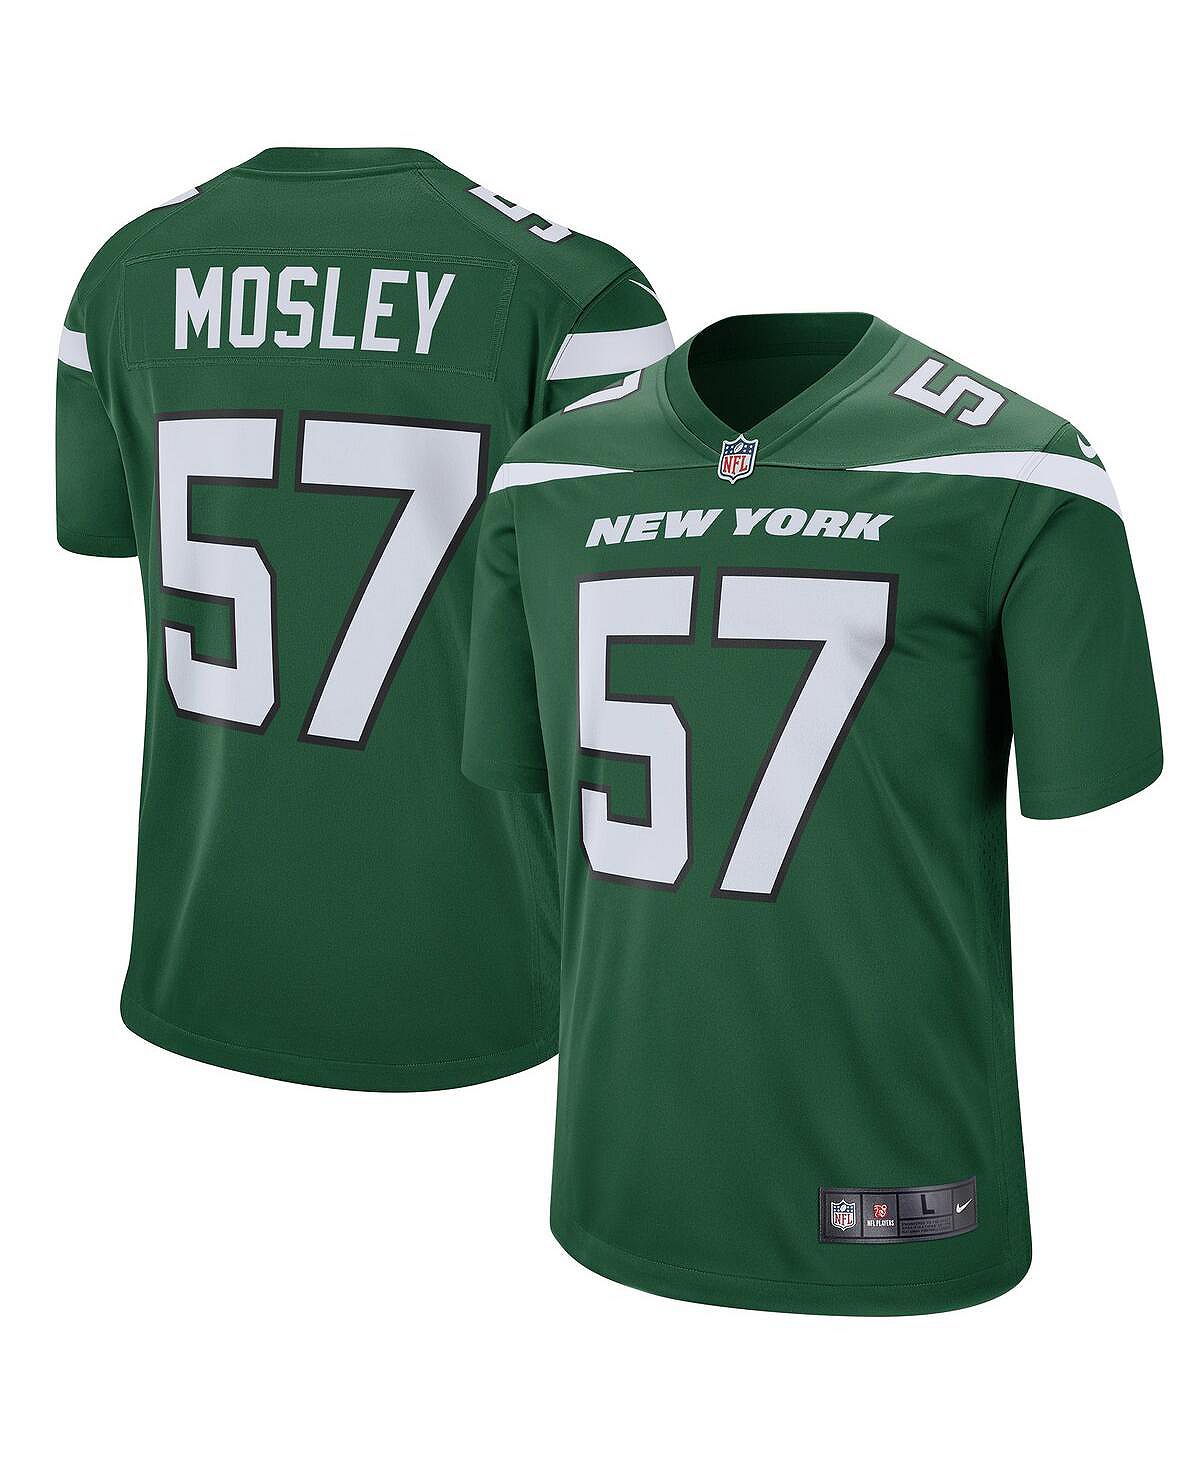 Мужская футболка cj mosley gotham green new york jets game jersey Nike, зеленый рюкзак new york jets premium на колесиках